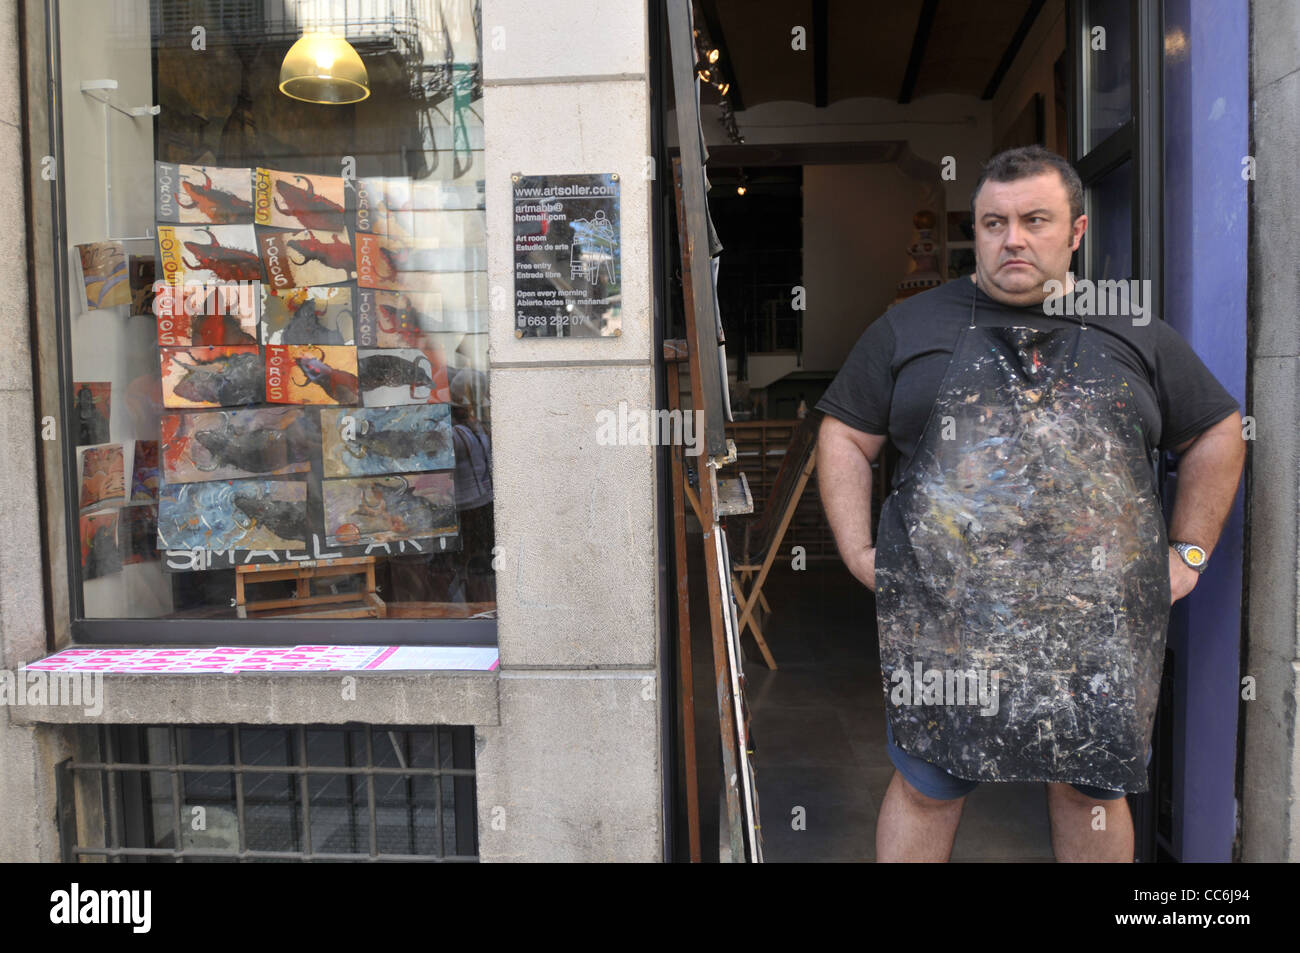 Artist wearing apron in doorway, Mallorca, Spain Stock Photo